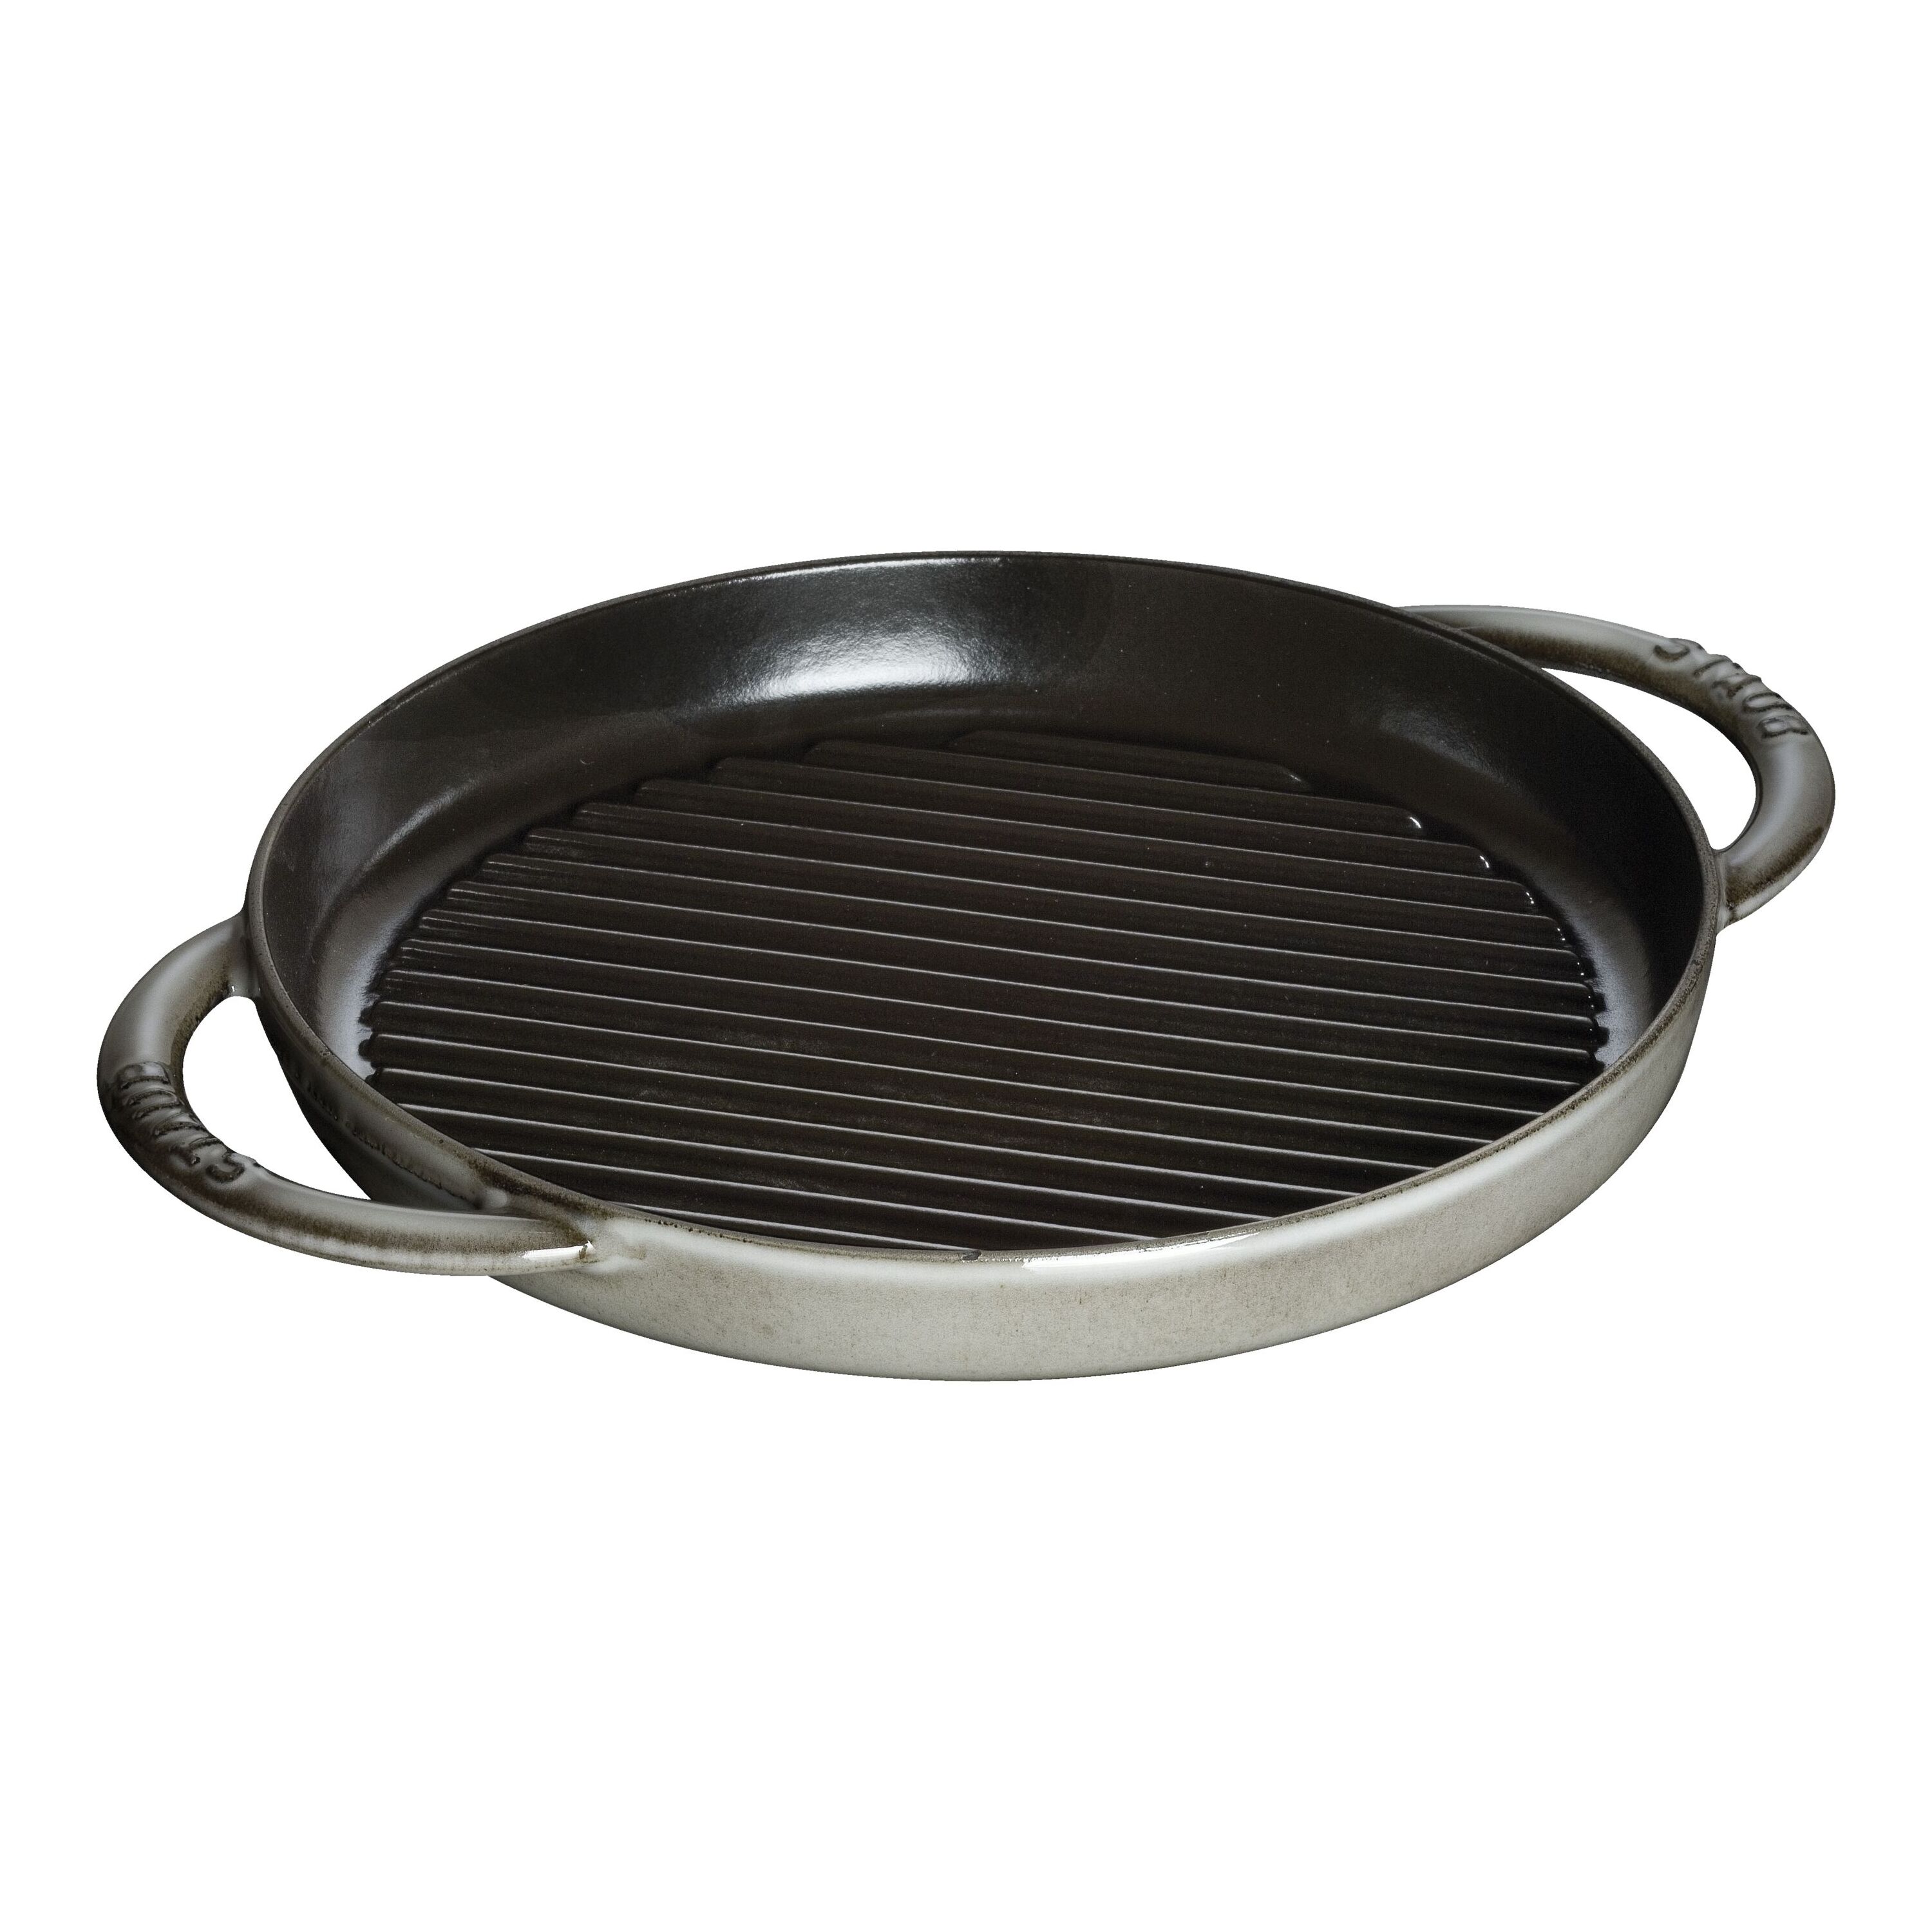 Staub Griddle Pan 33x33 cm, Grey - Staub @ RoyalDesign